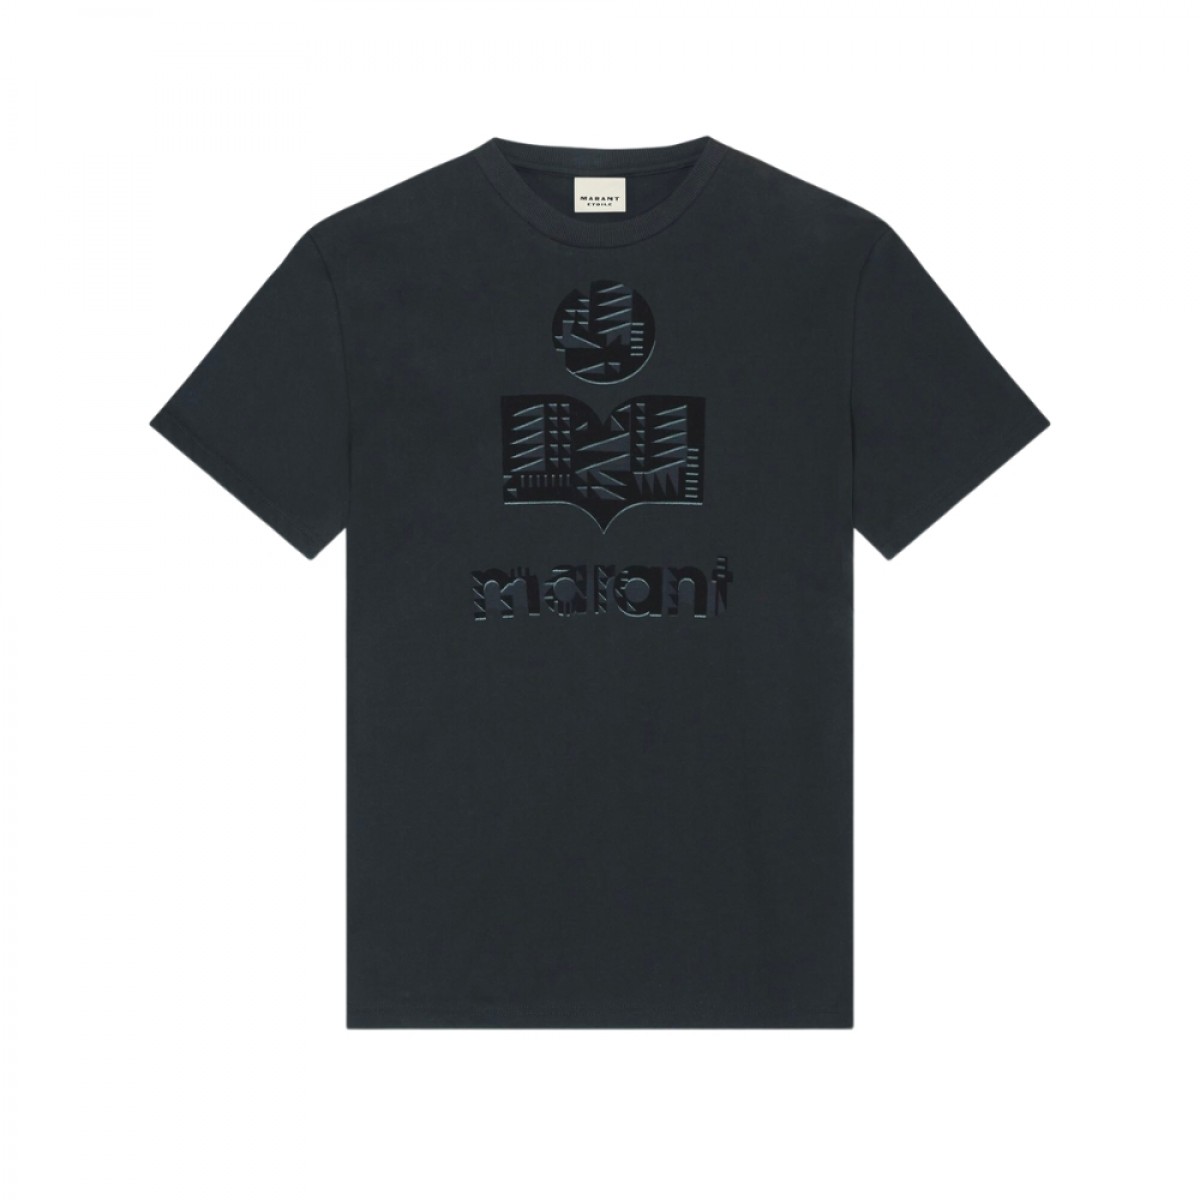 zewel t-shirt - black - front